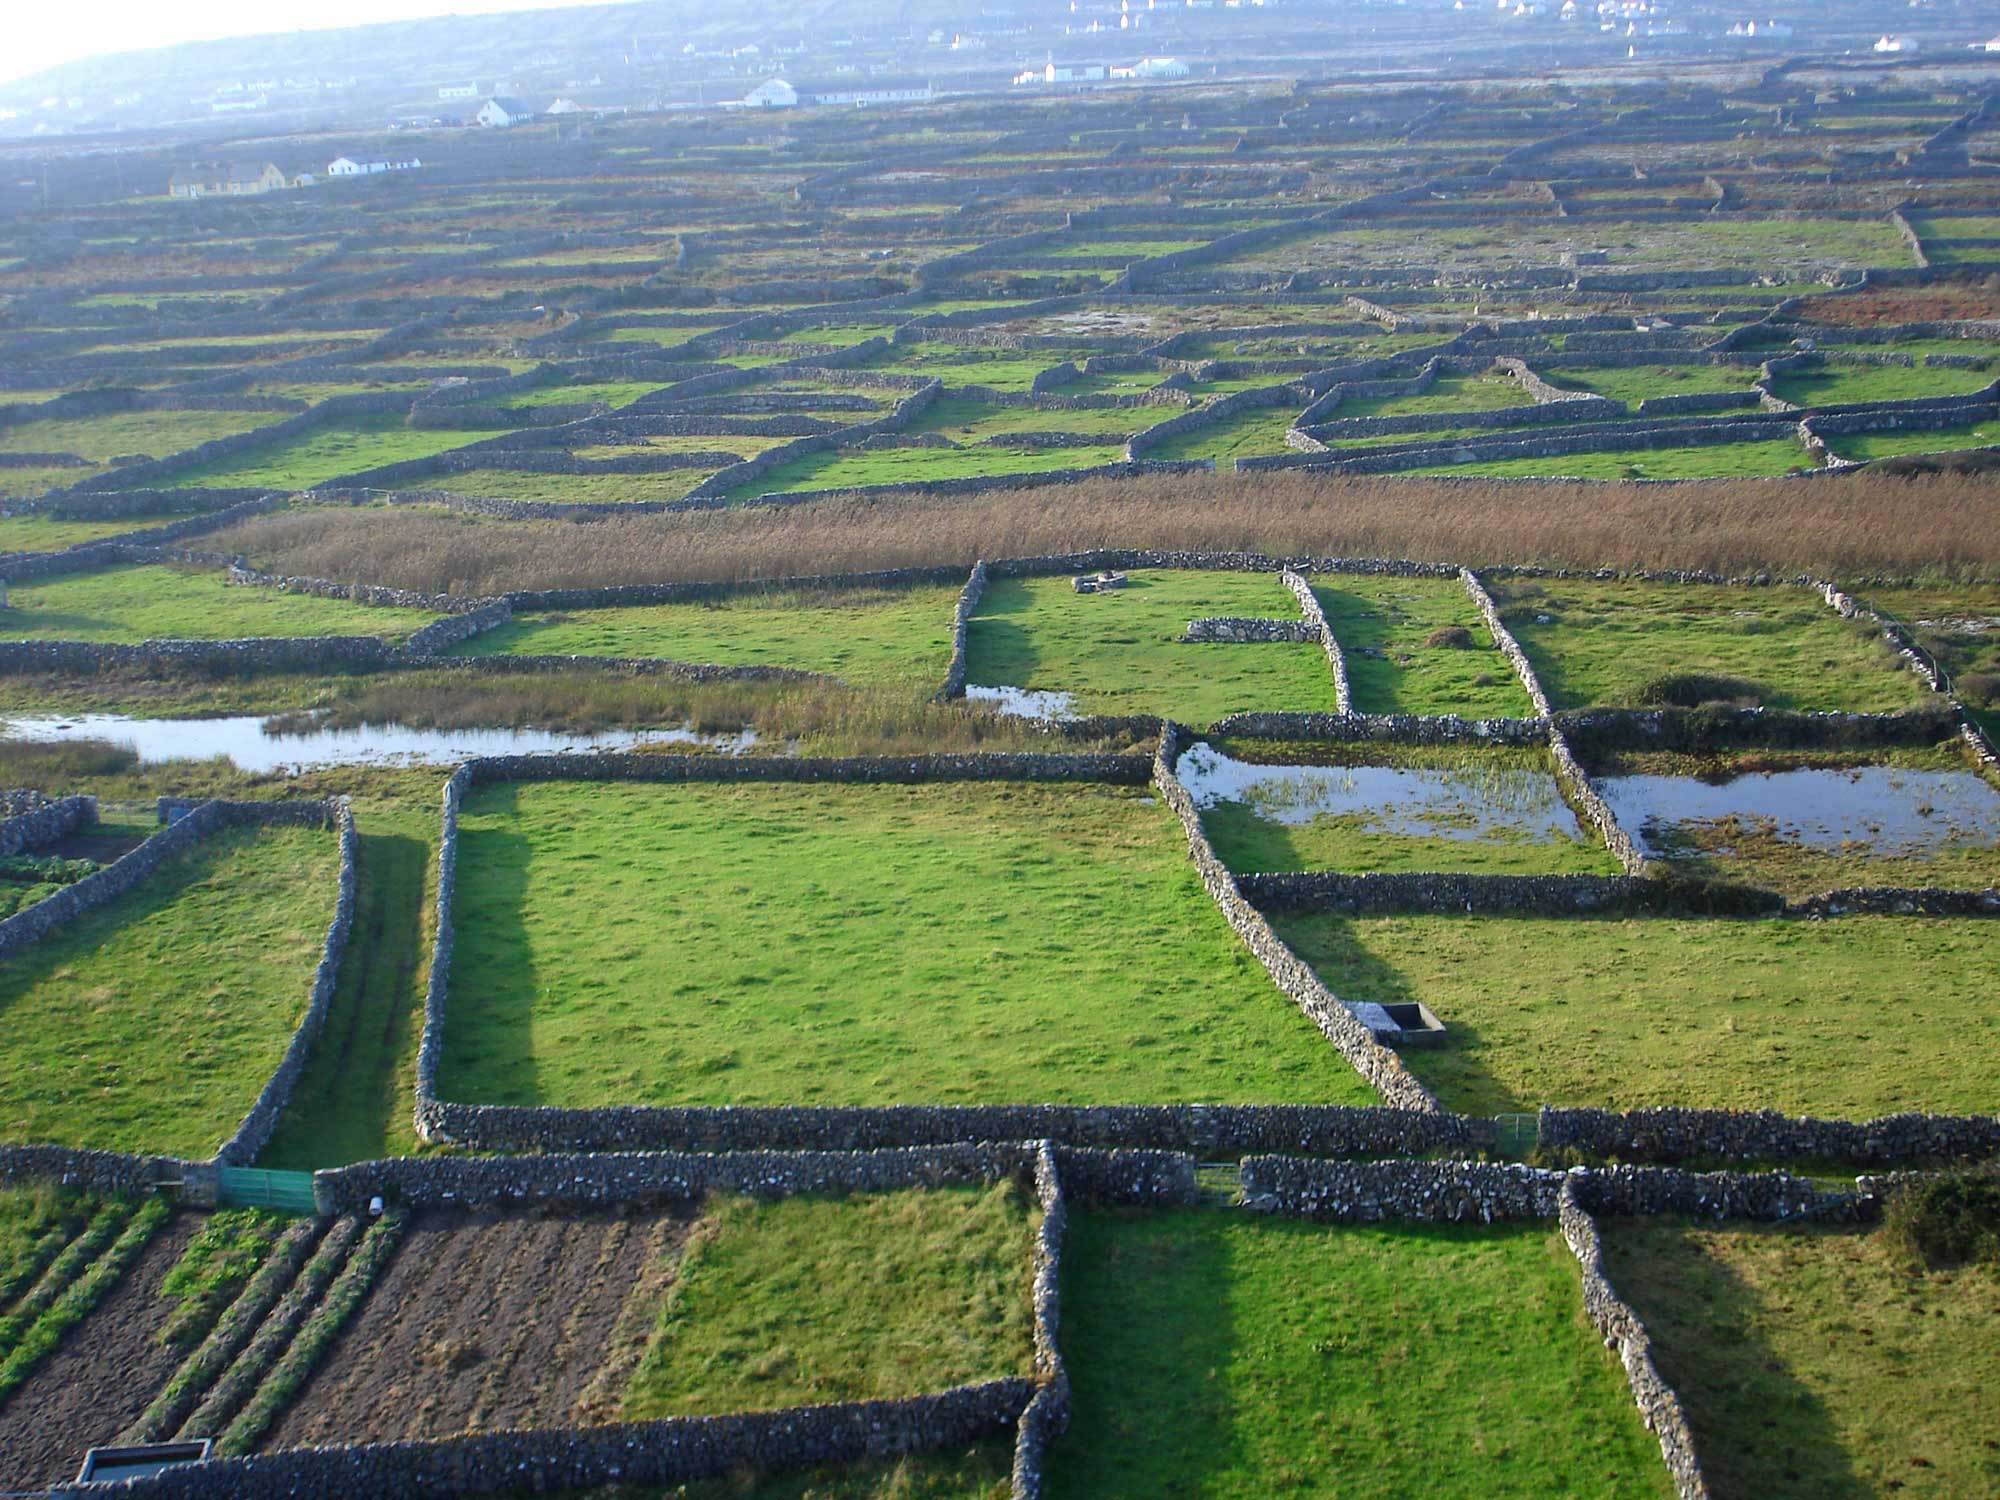 Stone walls in Ireland